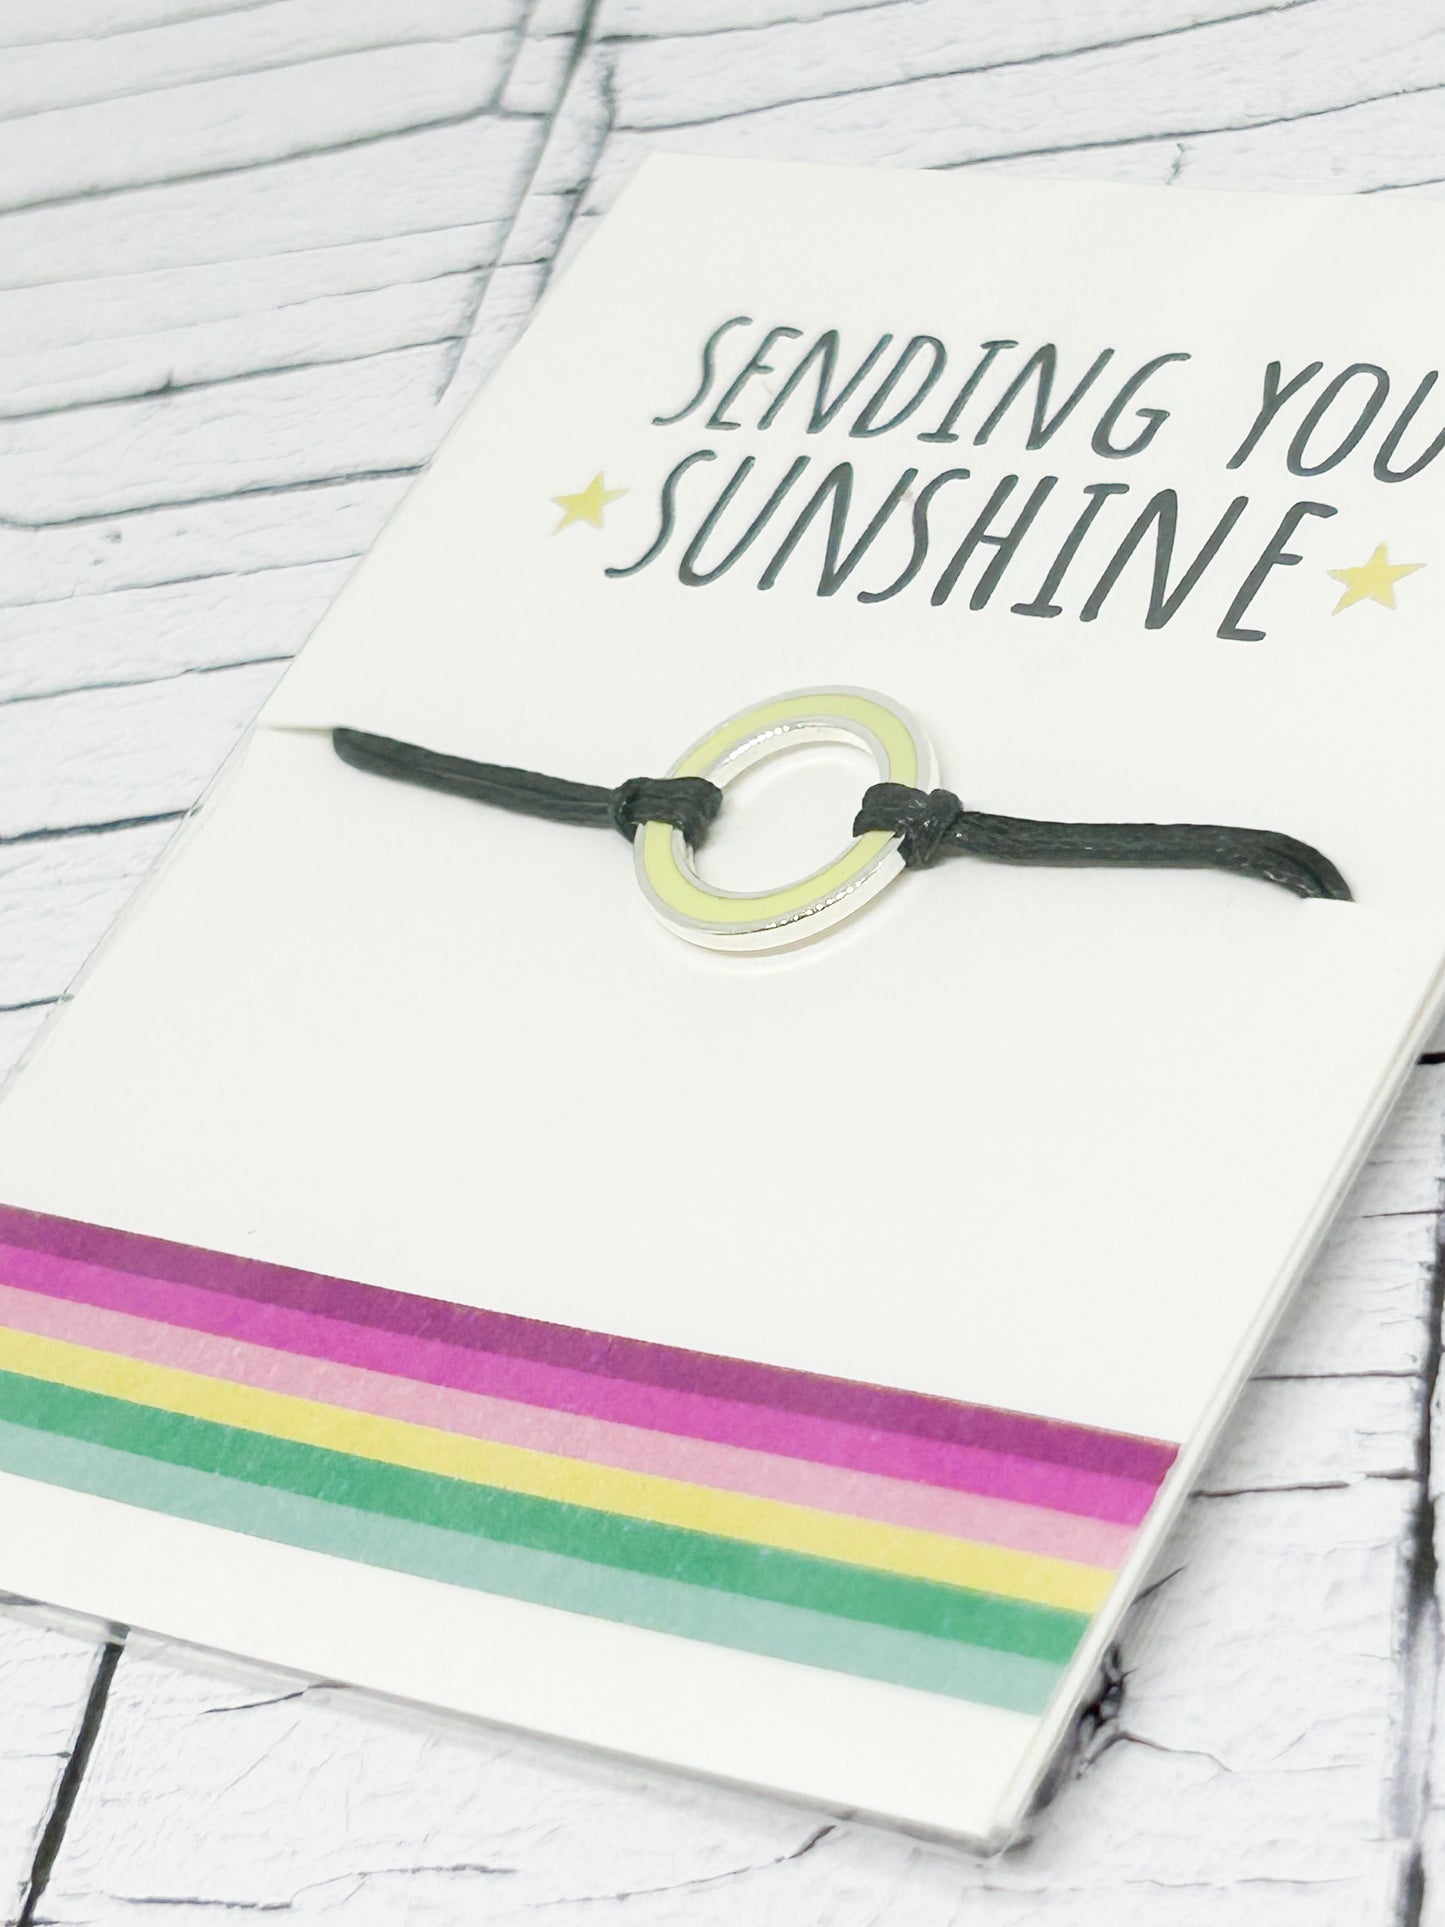 'Sending You Sunshine' Sentiment String Bracelet.